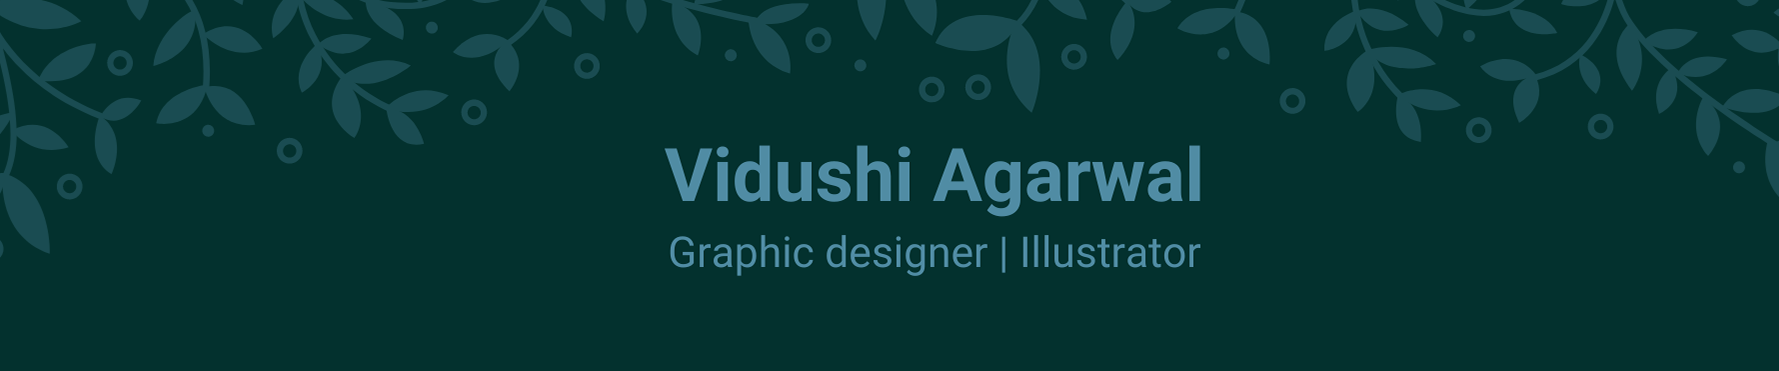 Vidushi Agarwals profilbanner